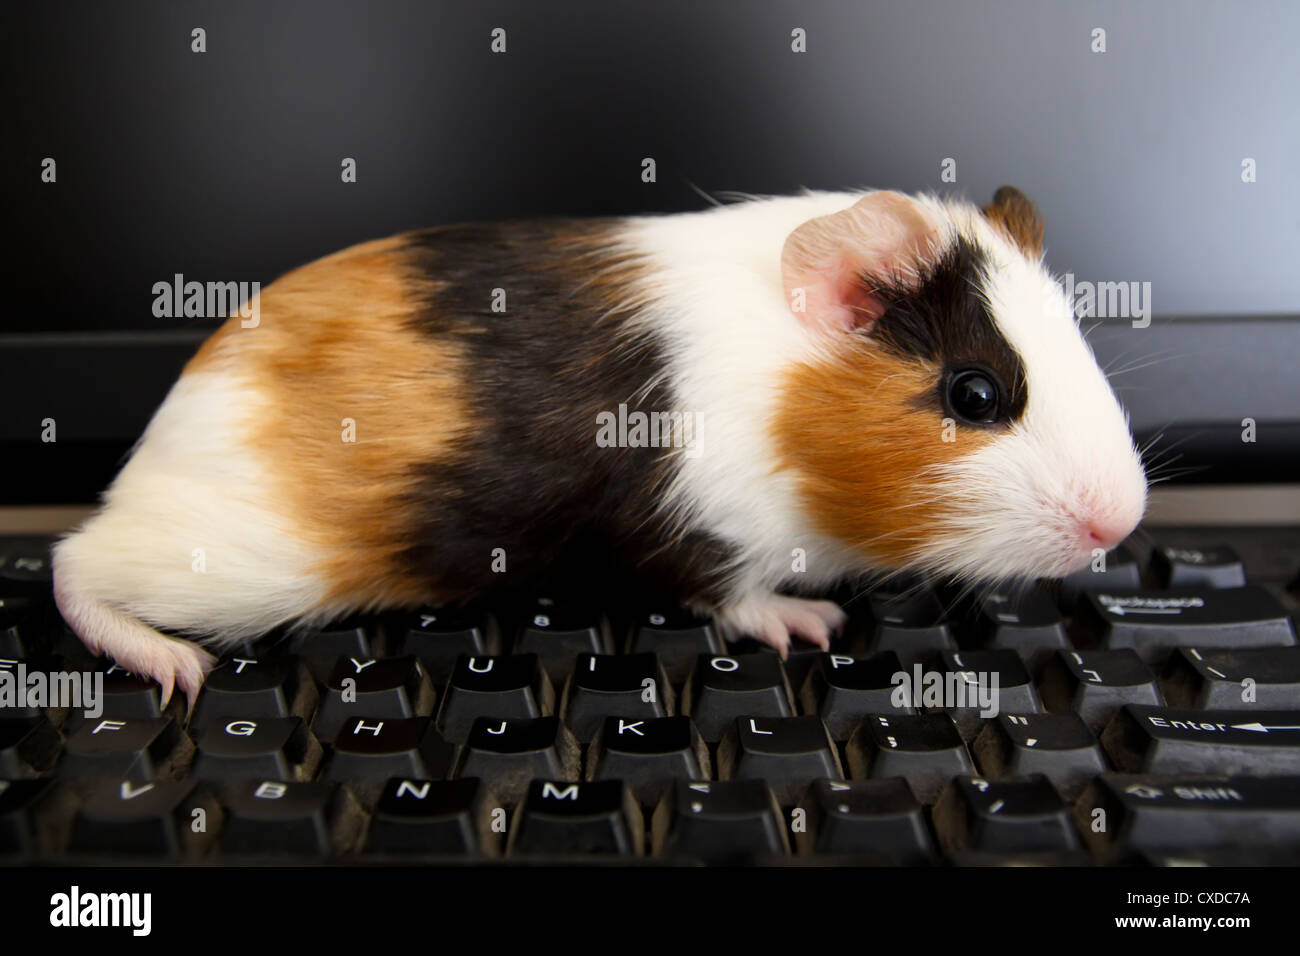 guinea pig on keyboard Stock Photo